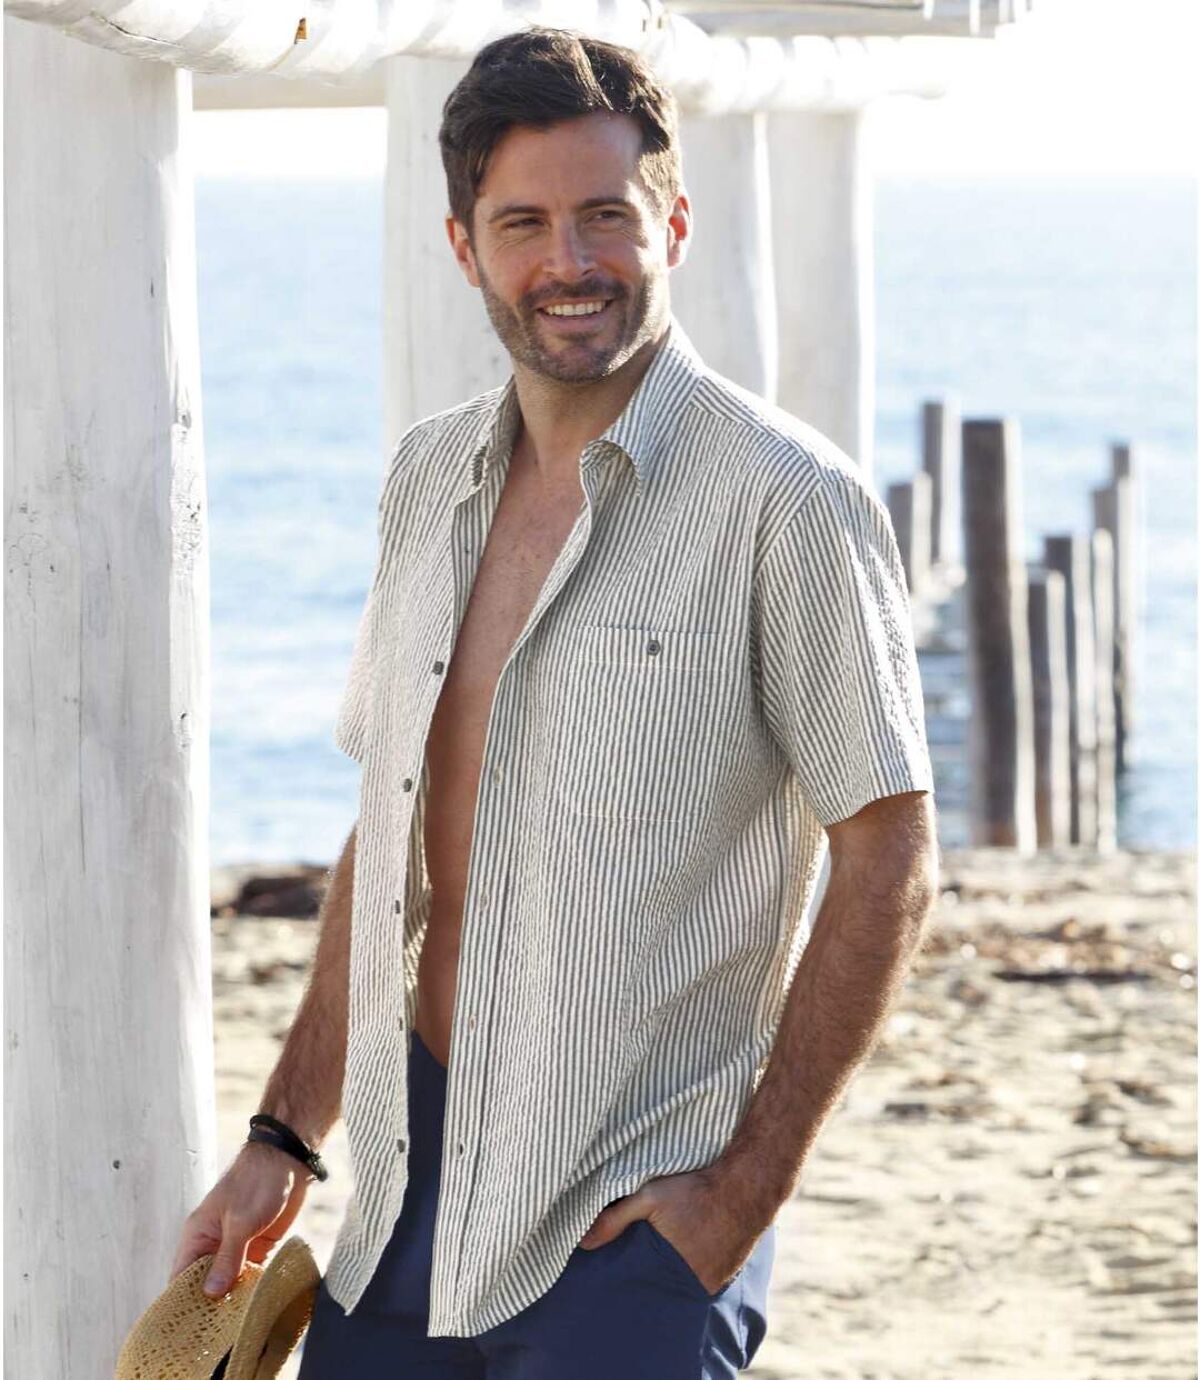 Men's Striped Textured Cotton Shirt - Gray, Ecru Atlas For Men